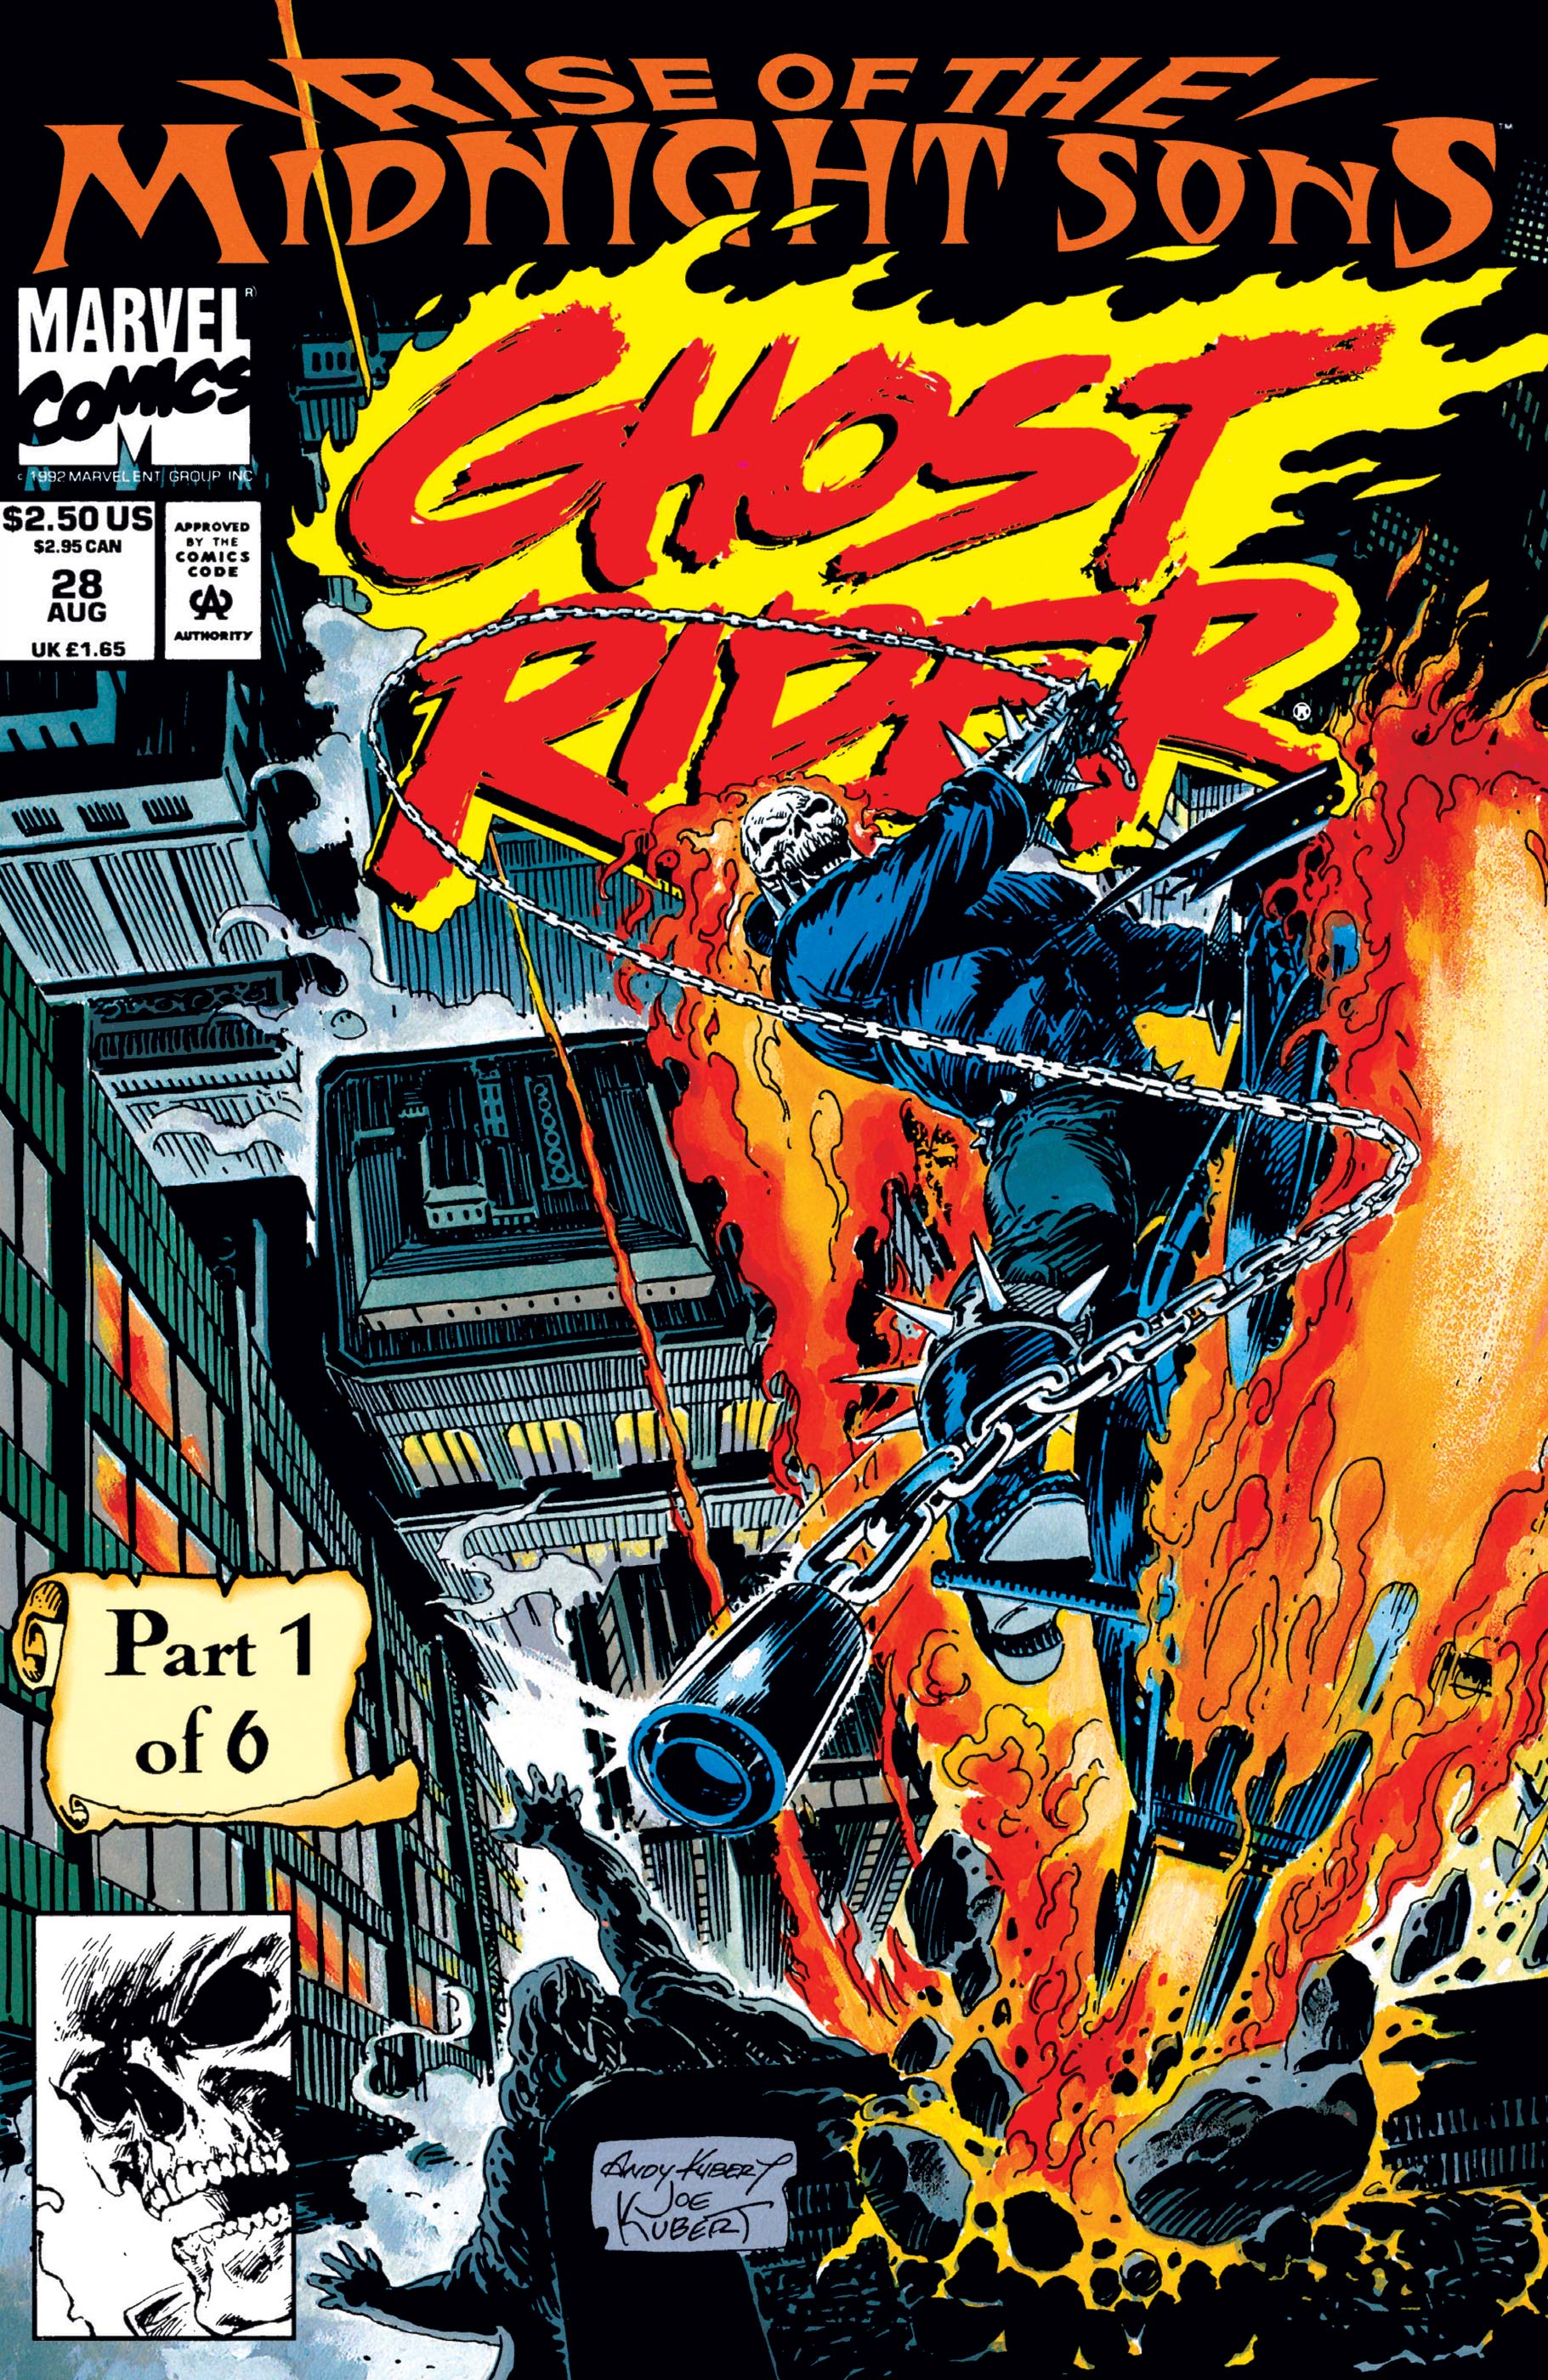 Ghost Rider (1990) #28